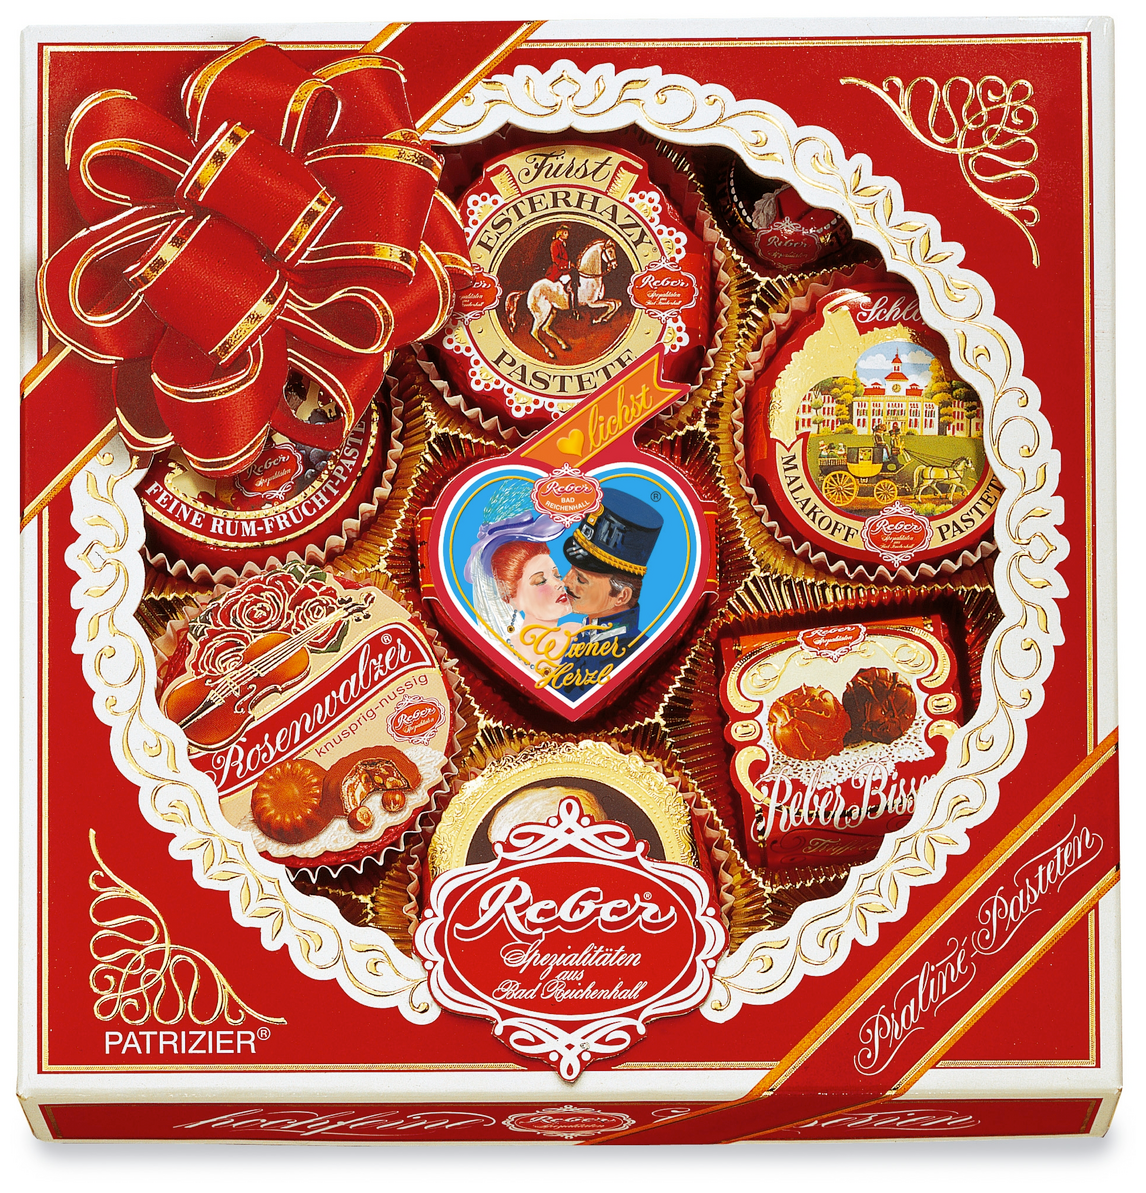 Reber Моцарт Шоколадные конфеты ассорти Patrizier, 340 г